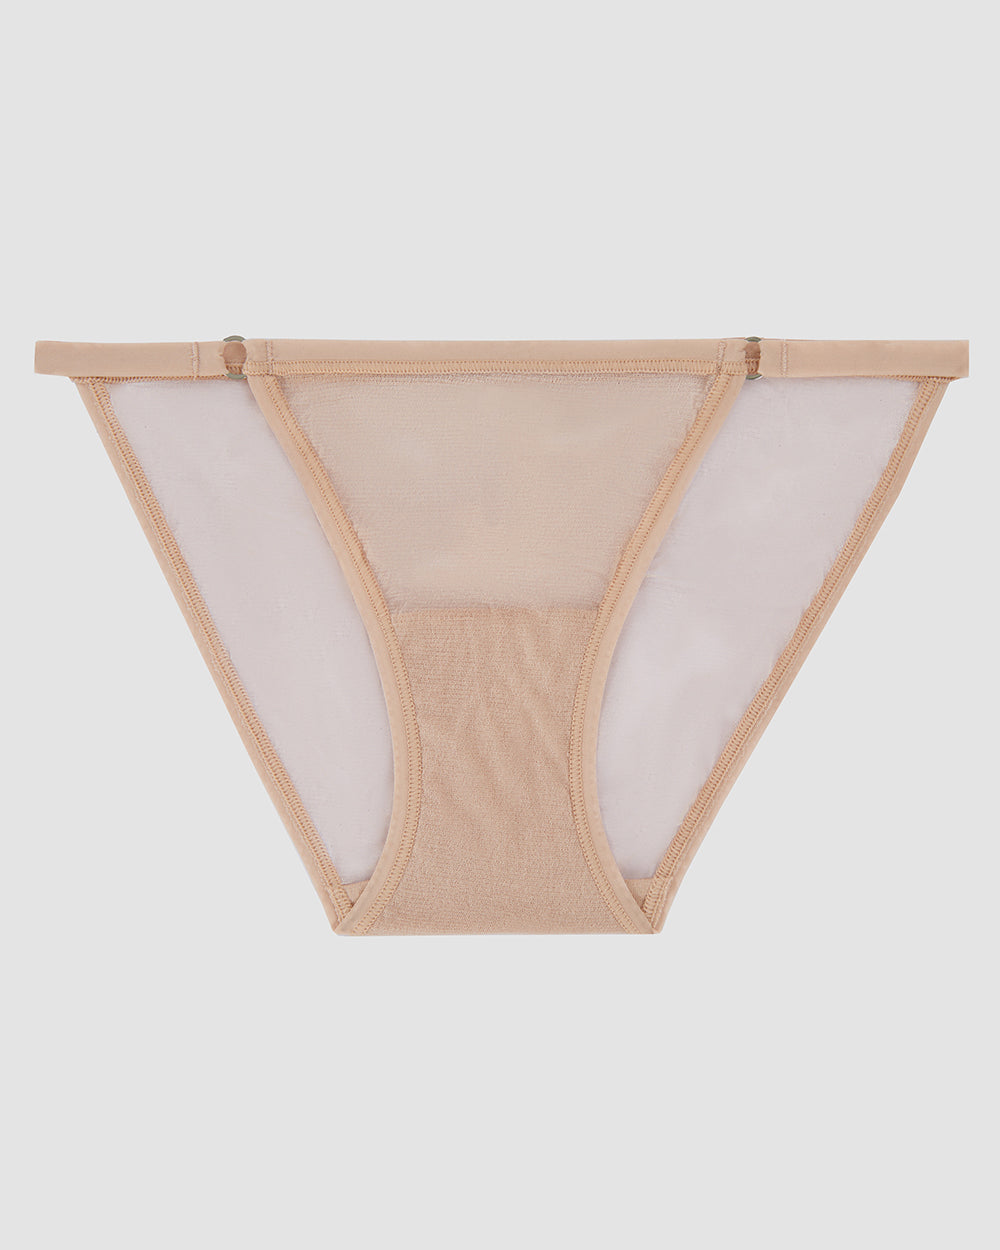 Champagne gossamer mesh string bikini underwear.